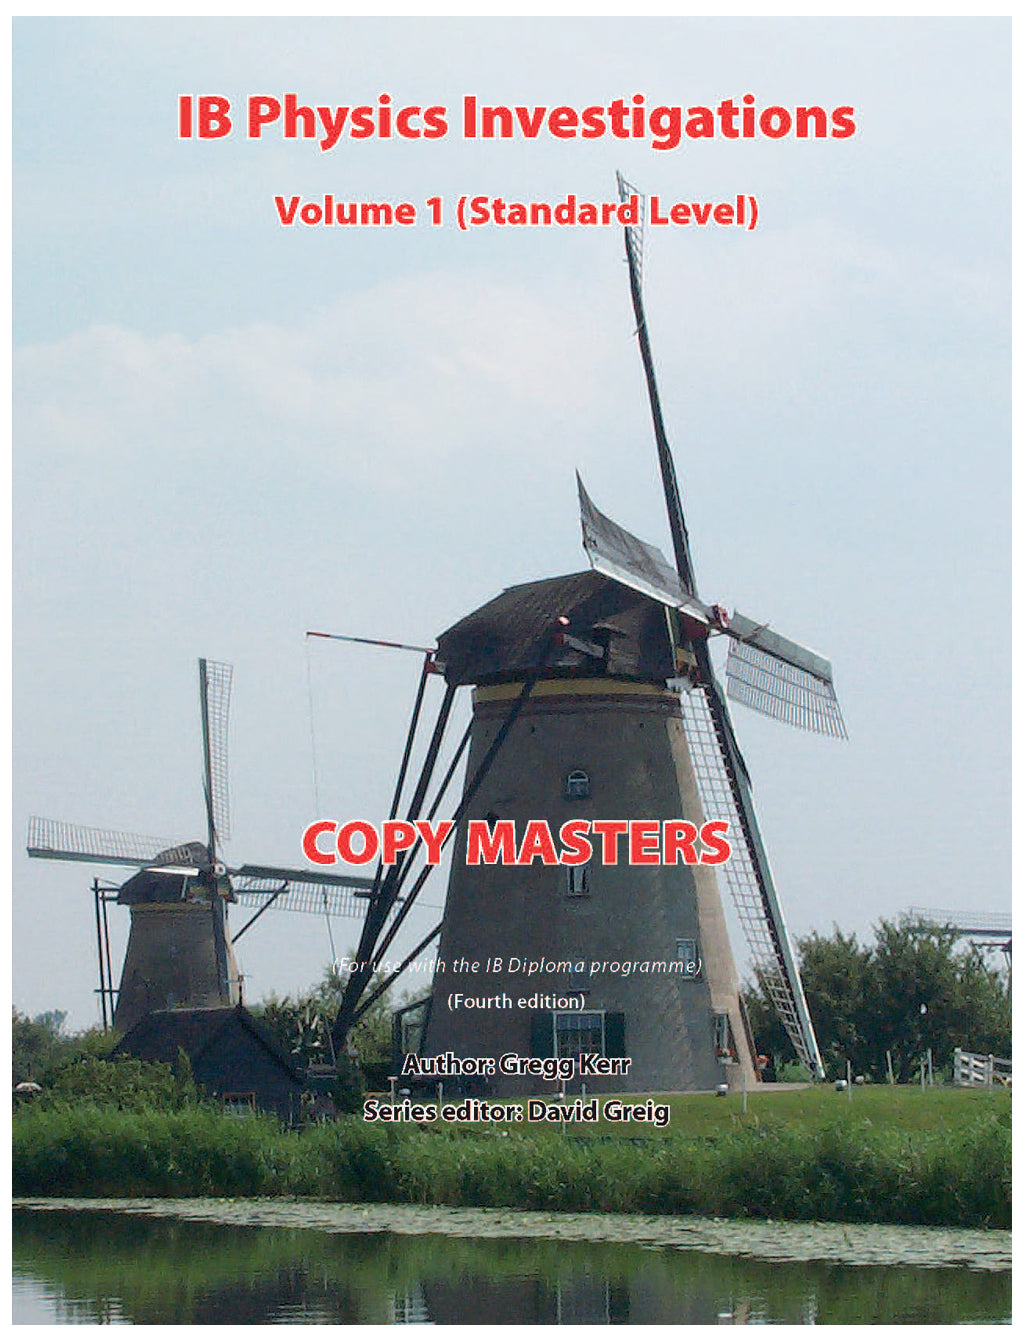 IB Physics Investigations Standard Level (4th Edition PDF)